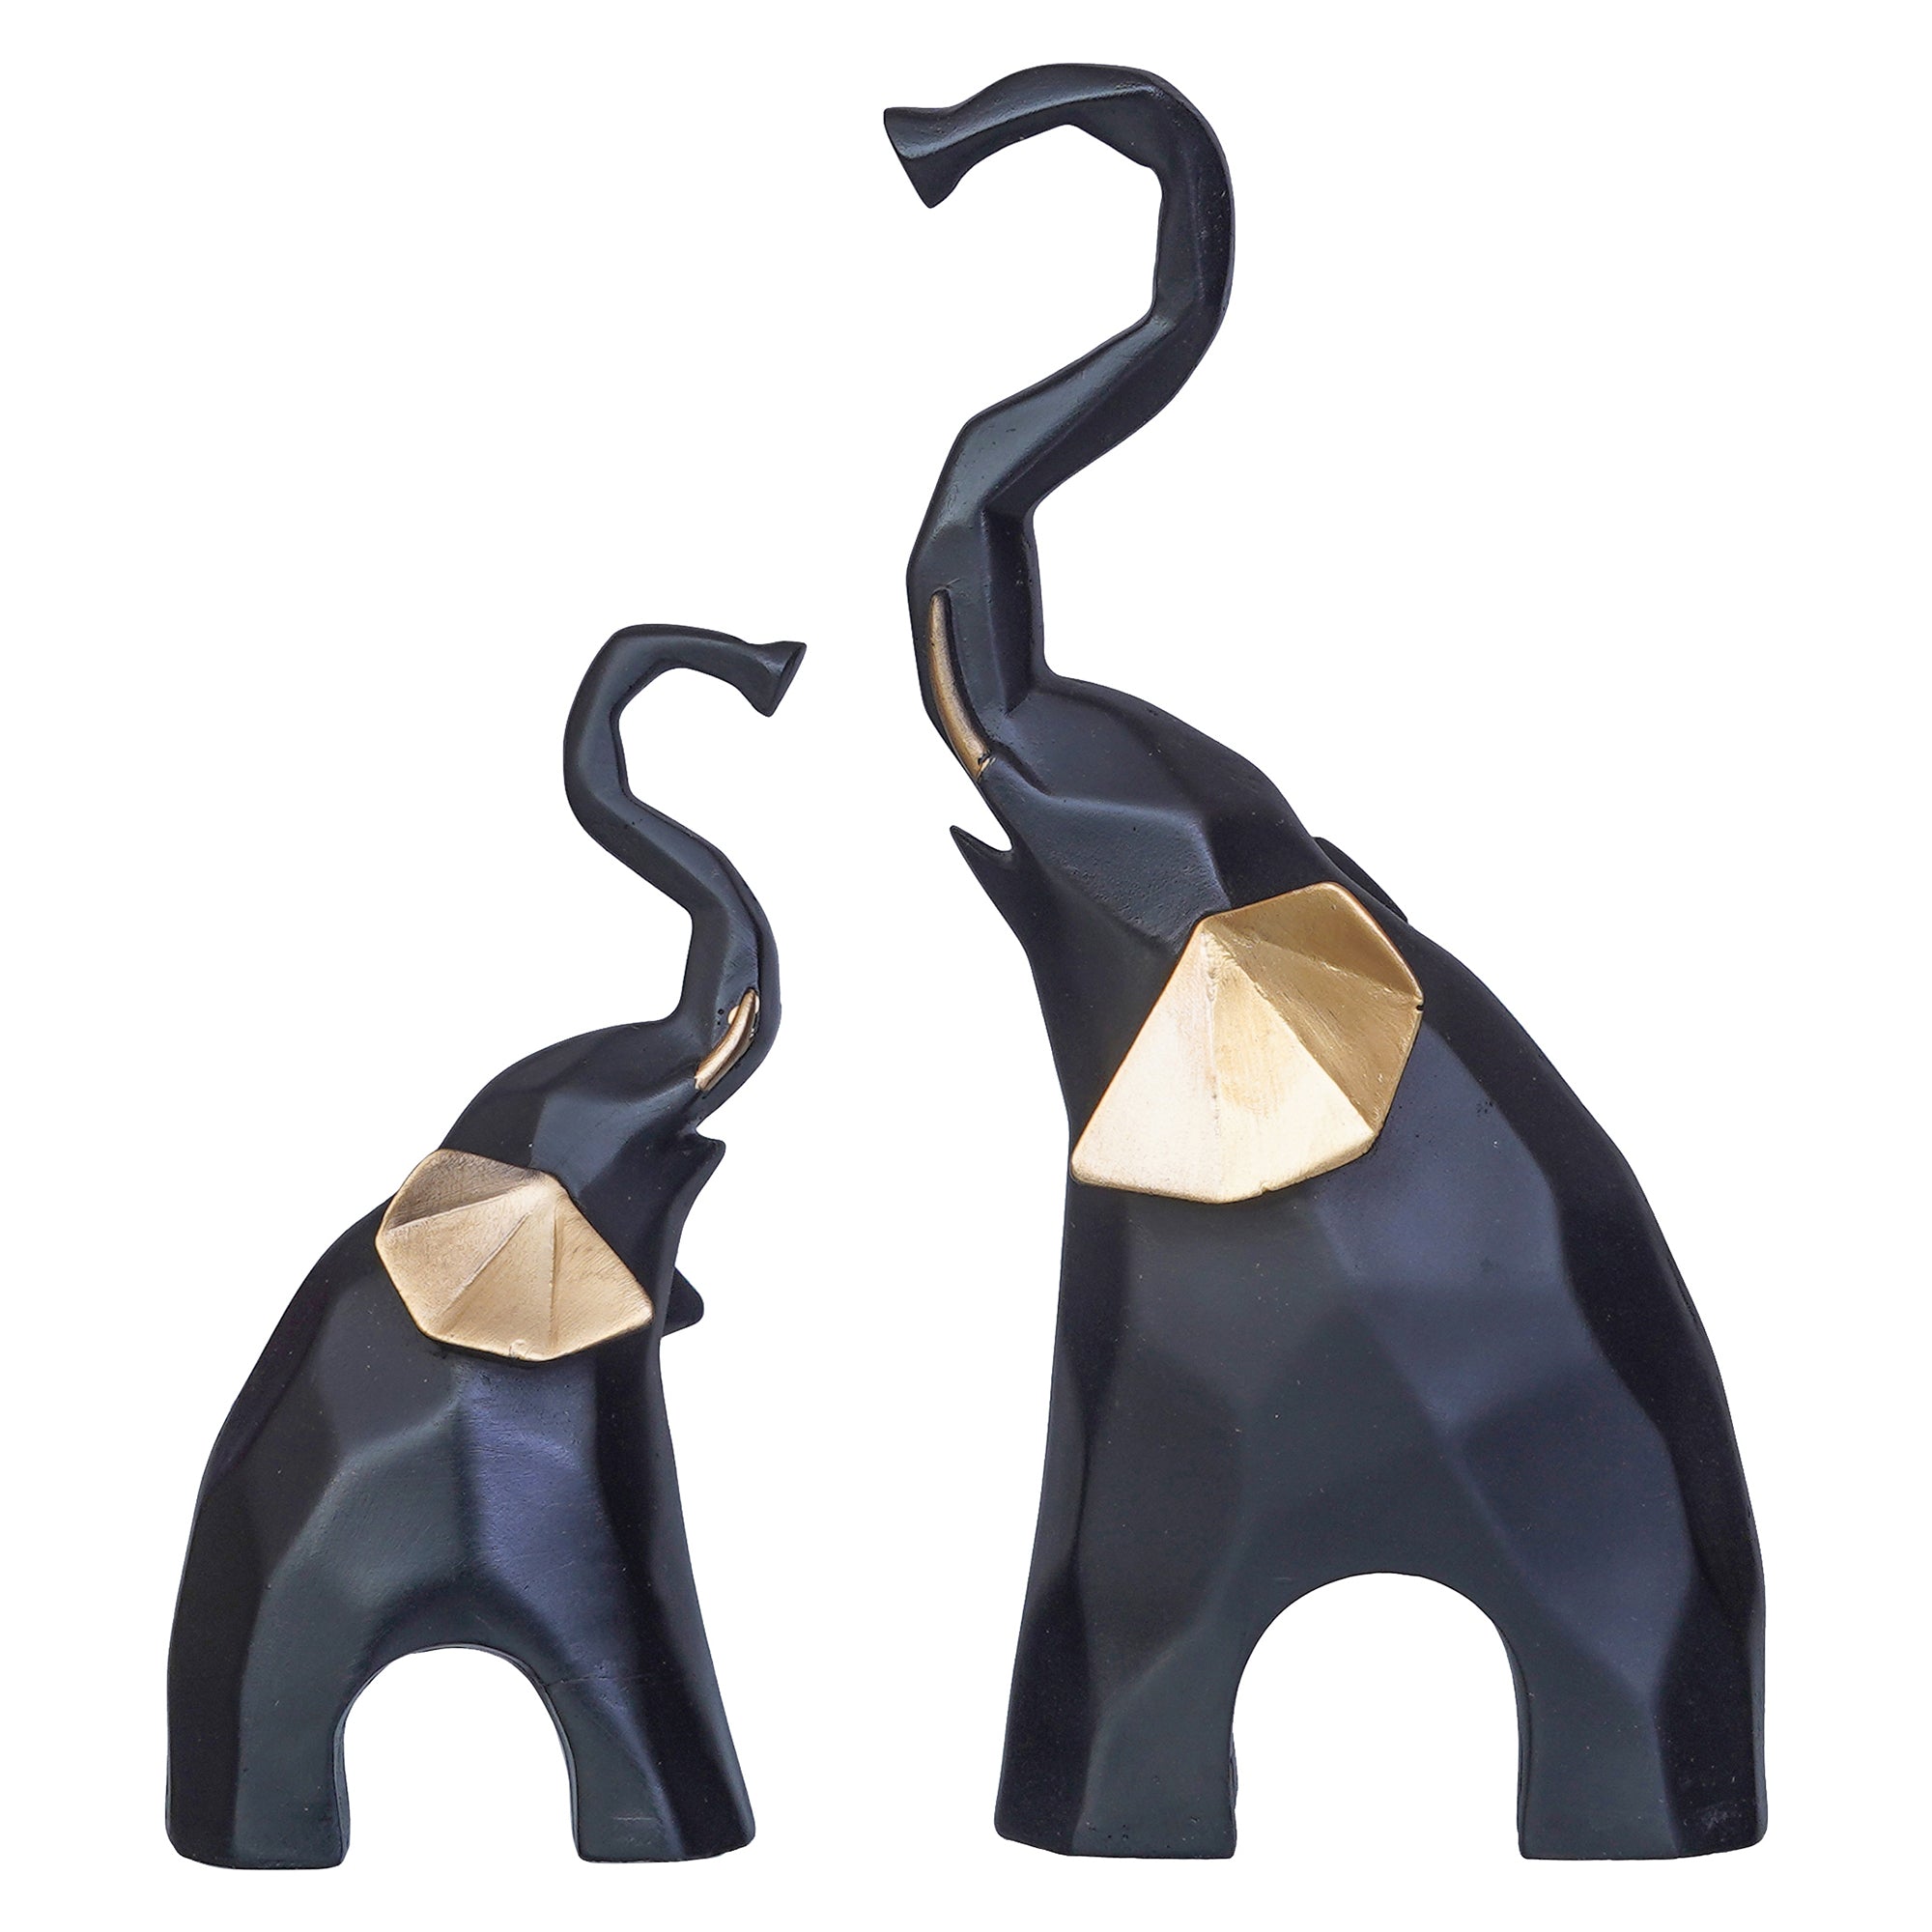 Set of 2 Gold & Black Elephant Statues Decorative Animal Showpieces 6